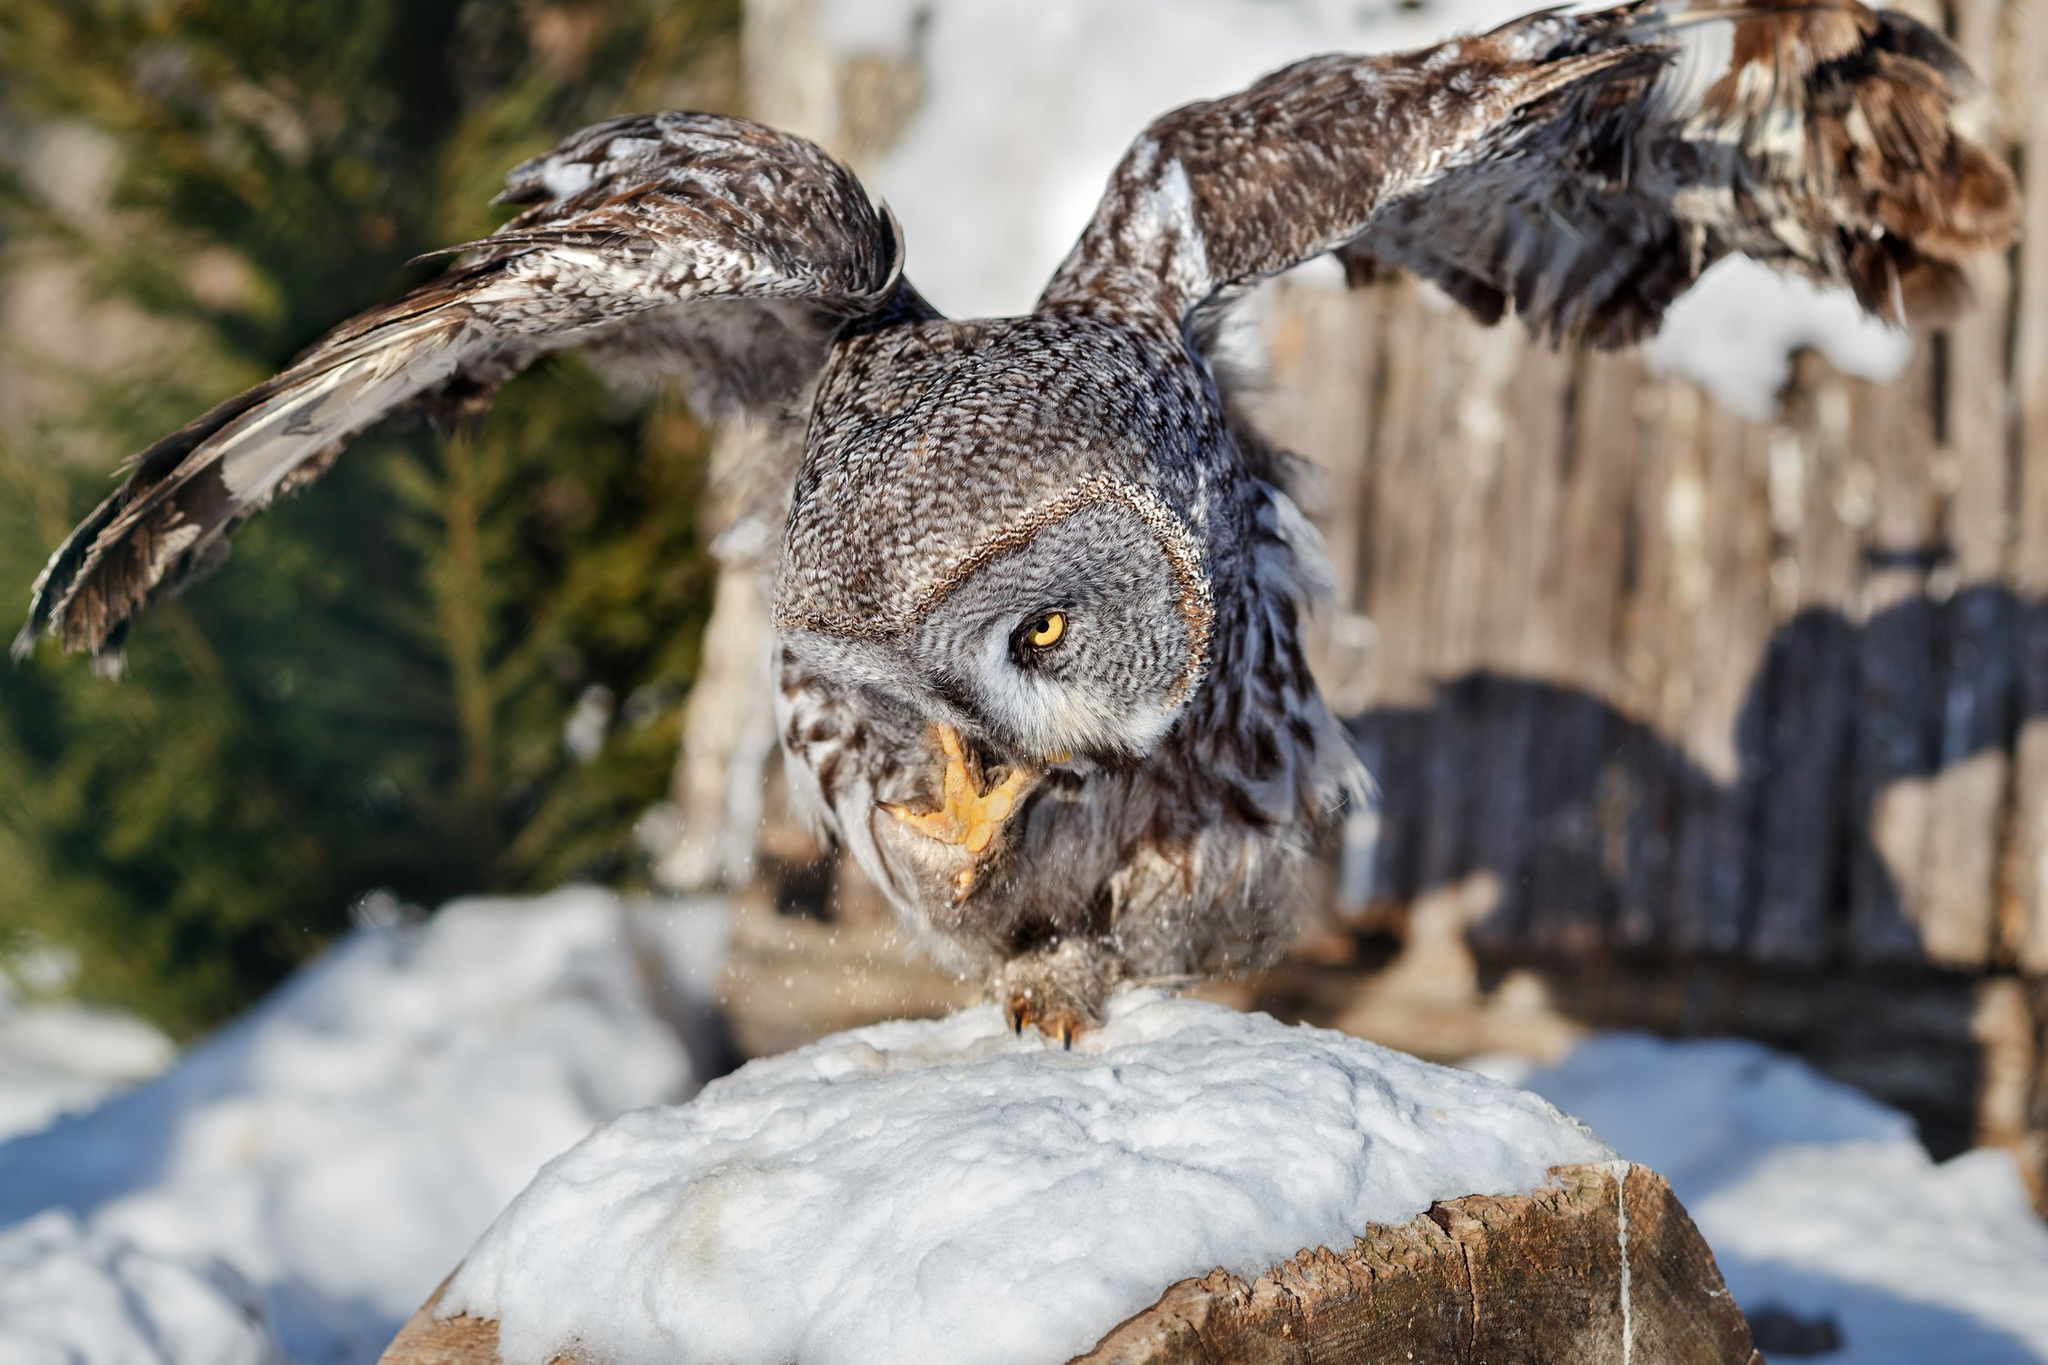 Bearded Owl - Bearded Owl, Tawny owl, Owls, Predator birds, Birds, The photo, The national geographic, Bogdanov Oleg, Longpost, 